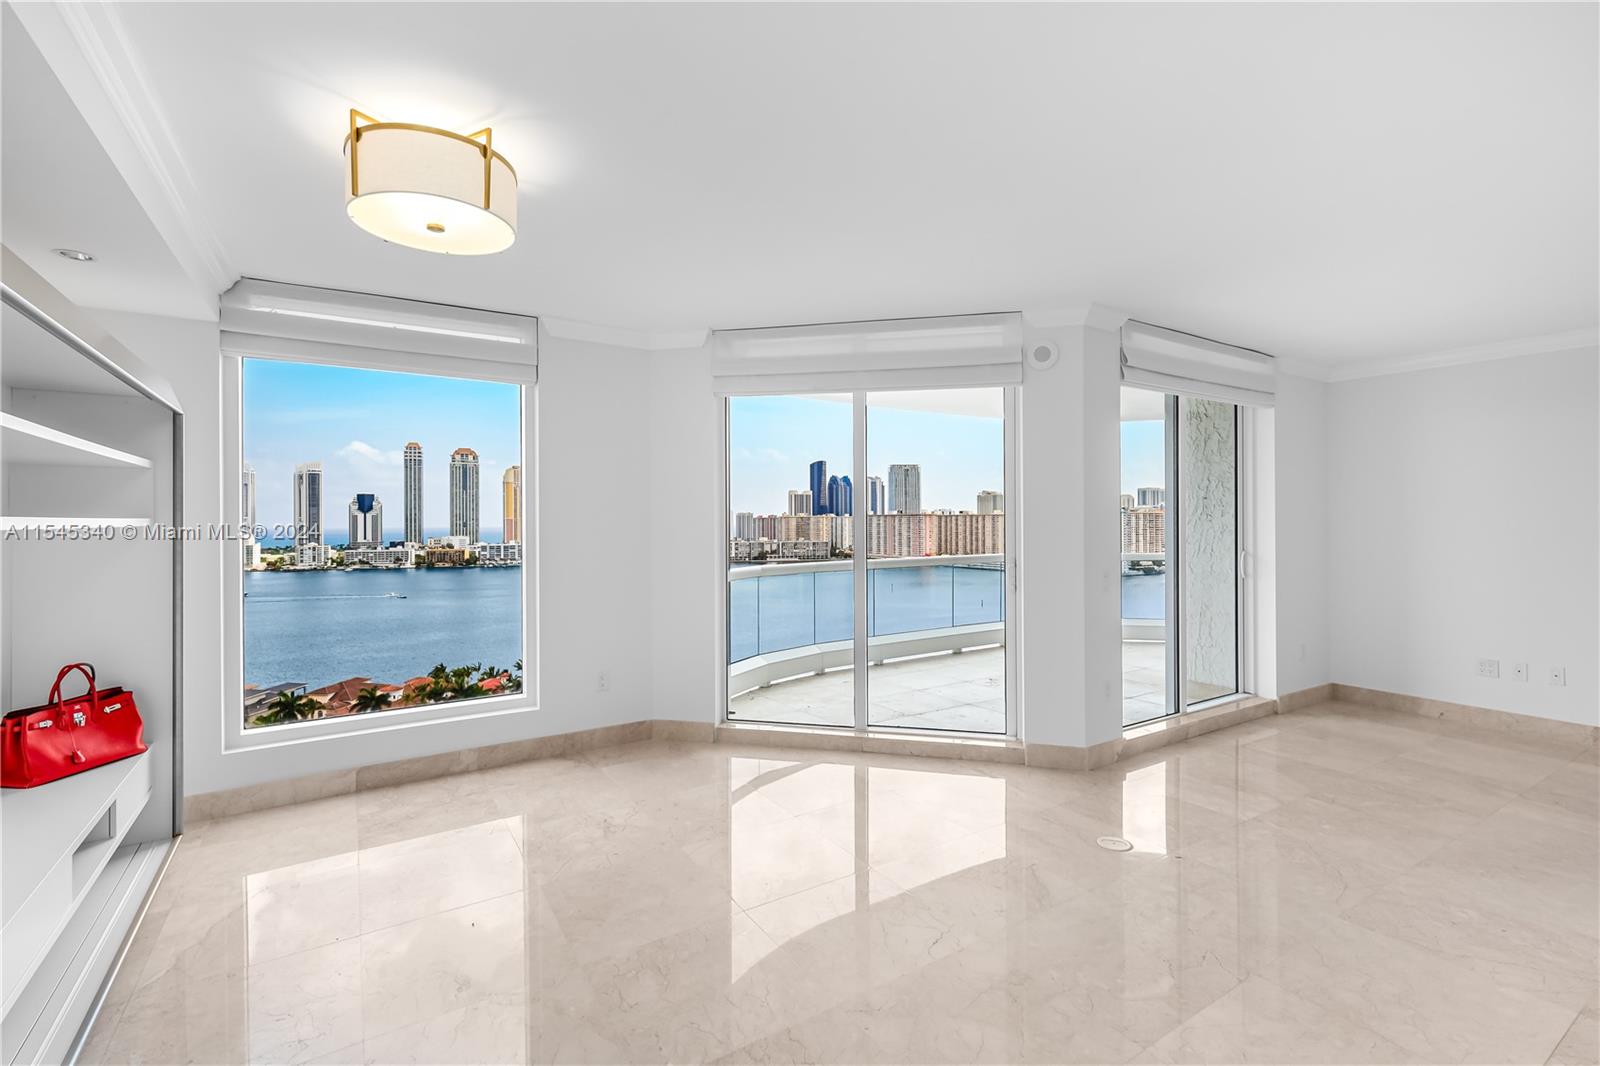 Property for Sale at 6000 Island Blvd Blvd 1804, Aventura, Miami-Dade County, Florida - Bedrooms: 3 
Bathrooms: 3  - $2,000,000